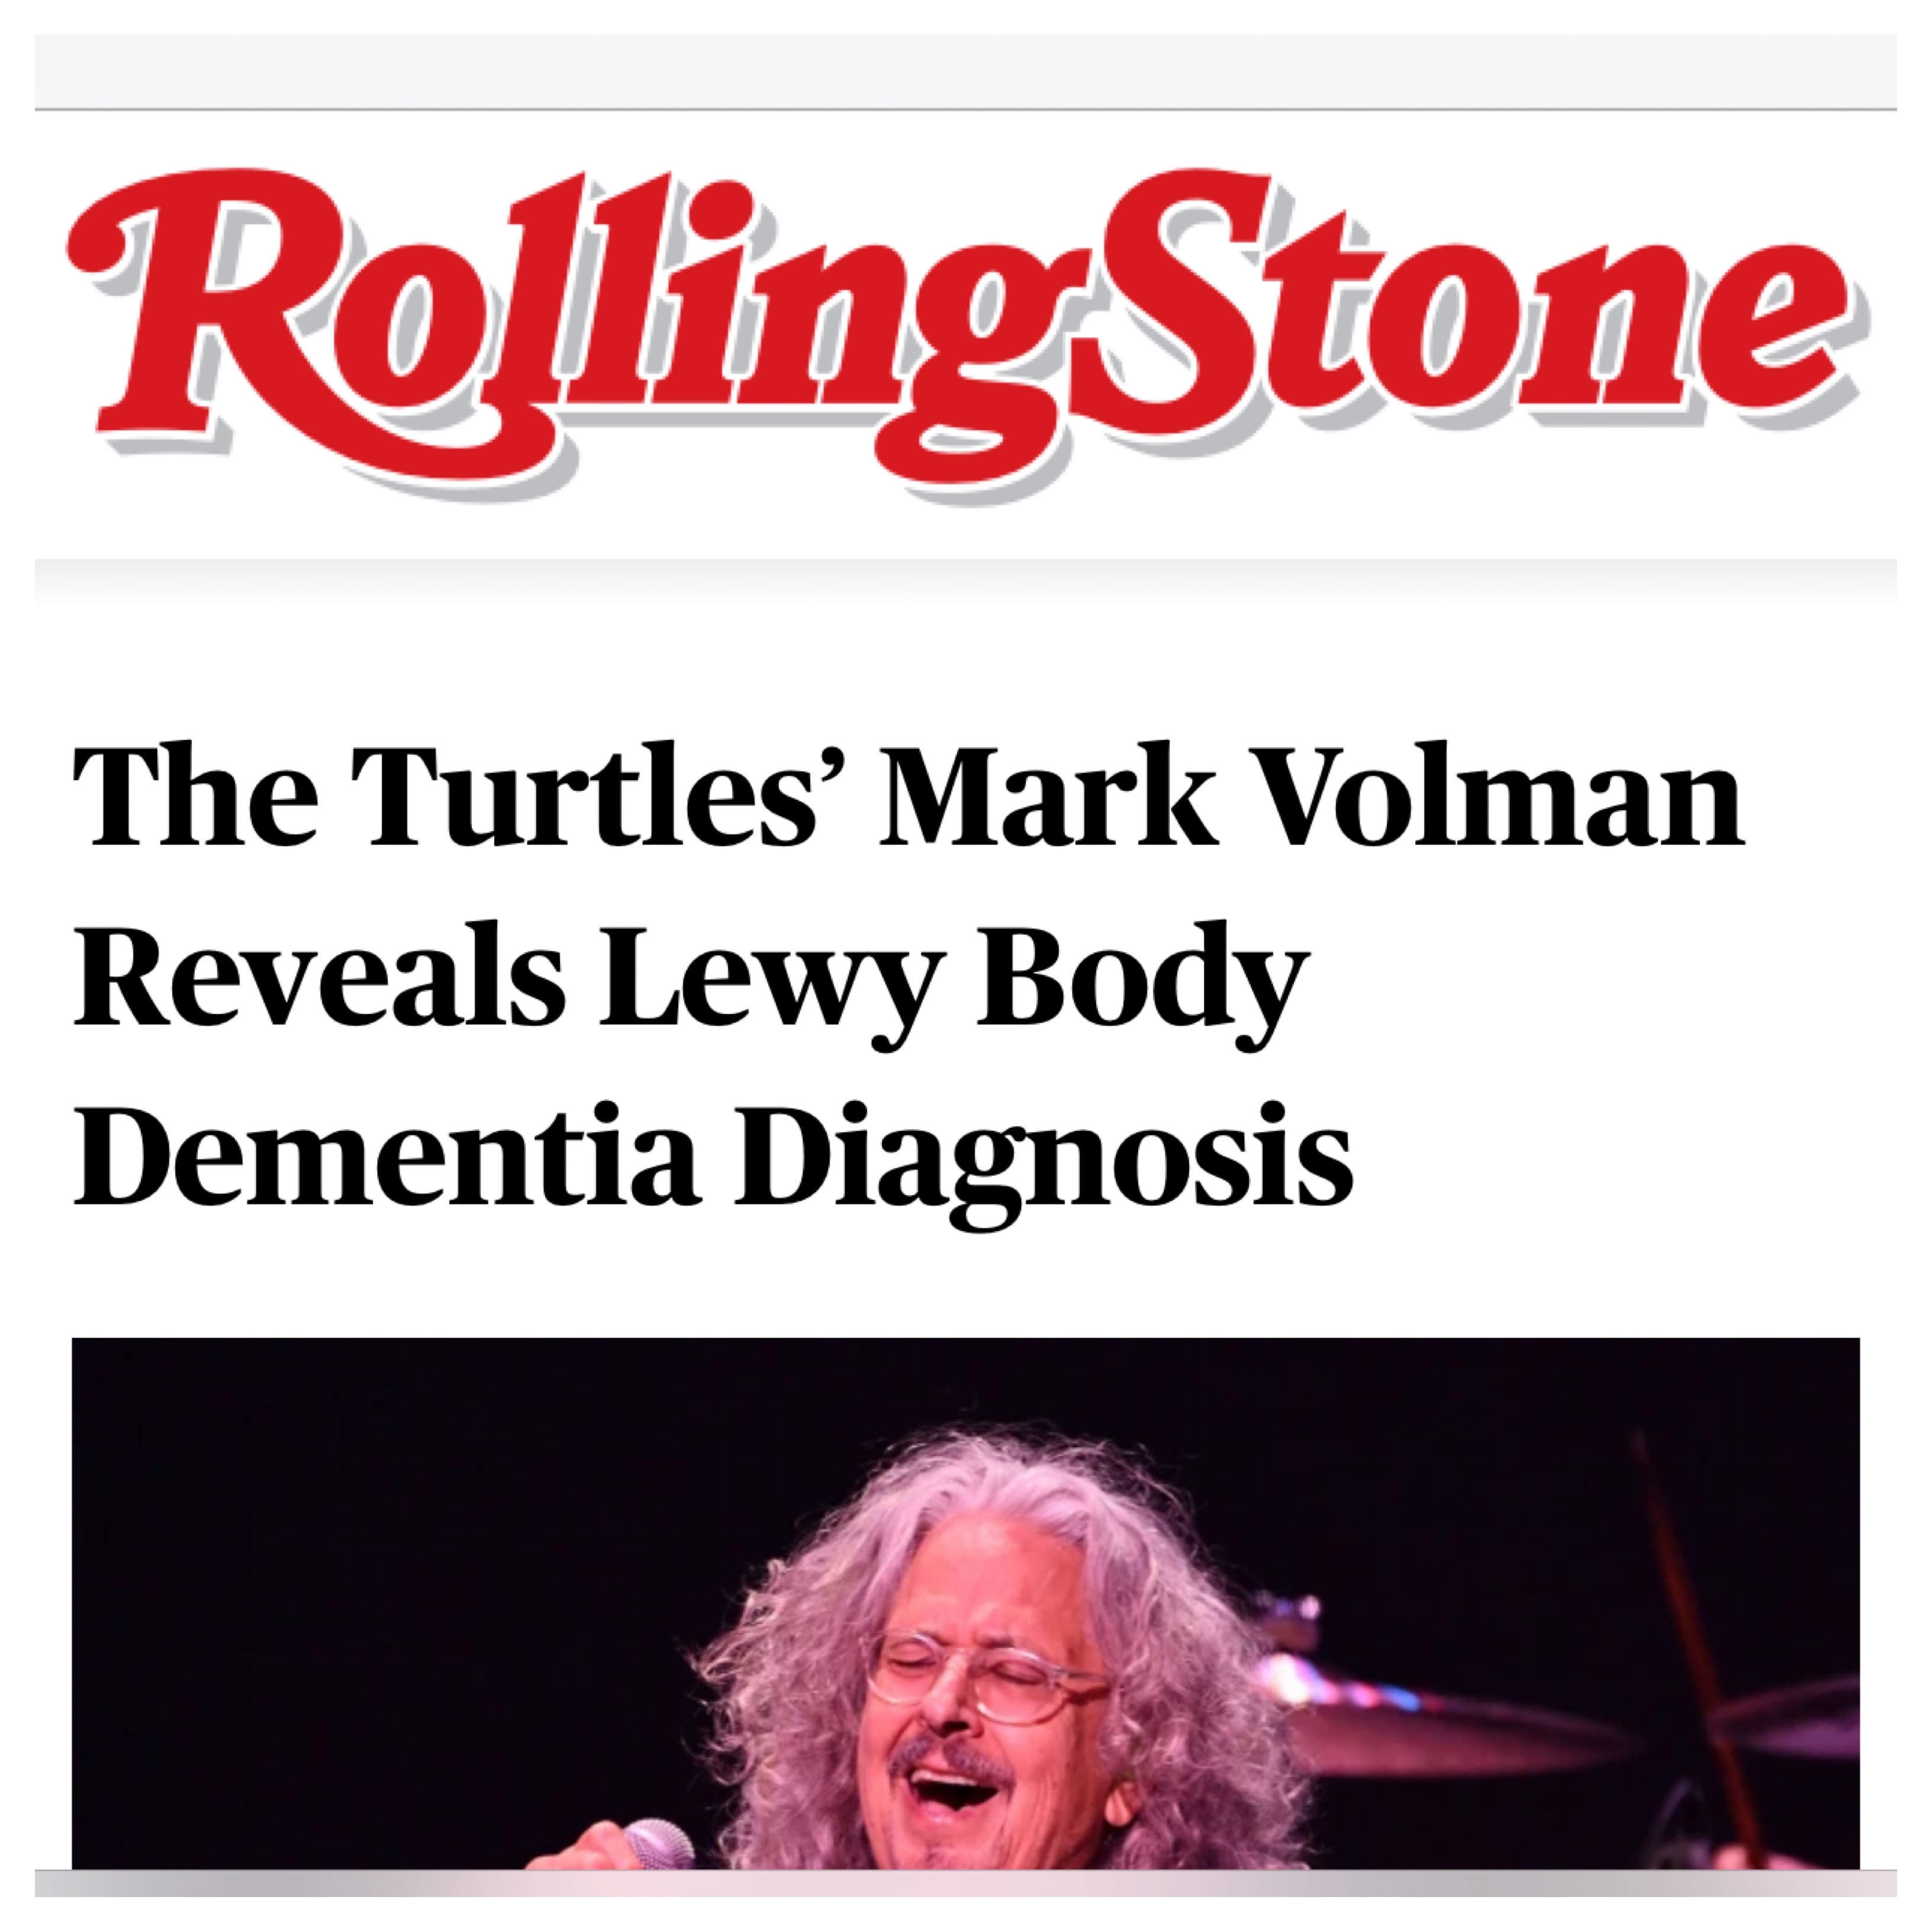 The Turtles' Mark Volman Reveals His Lewy Body Dementia Diagnosis